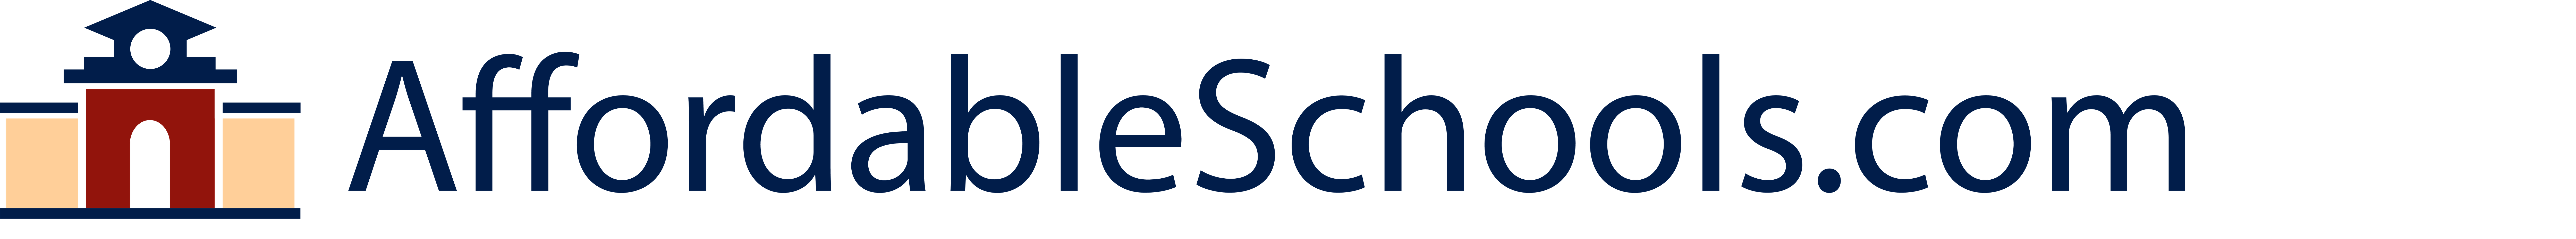 Affordable Schools logo flat